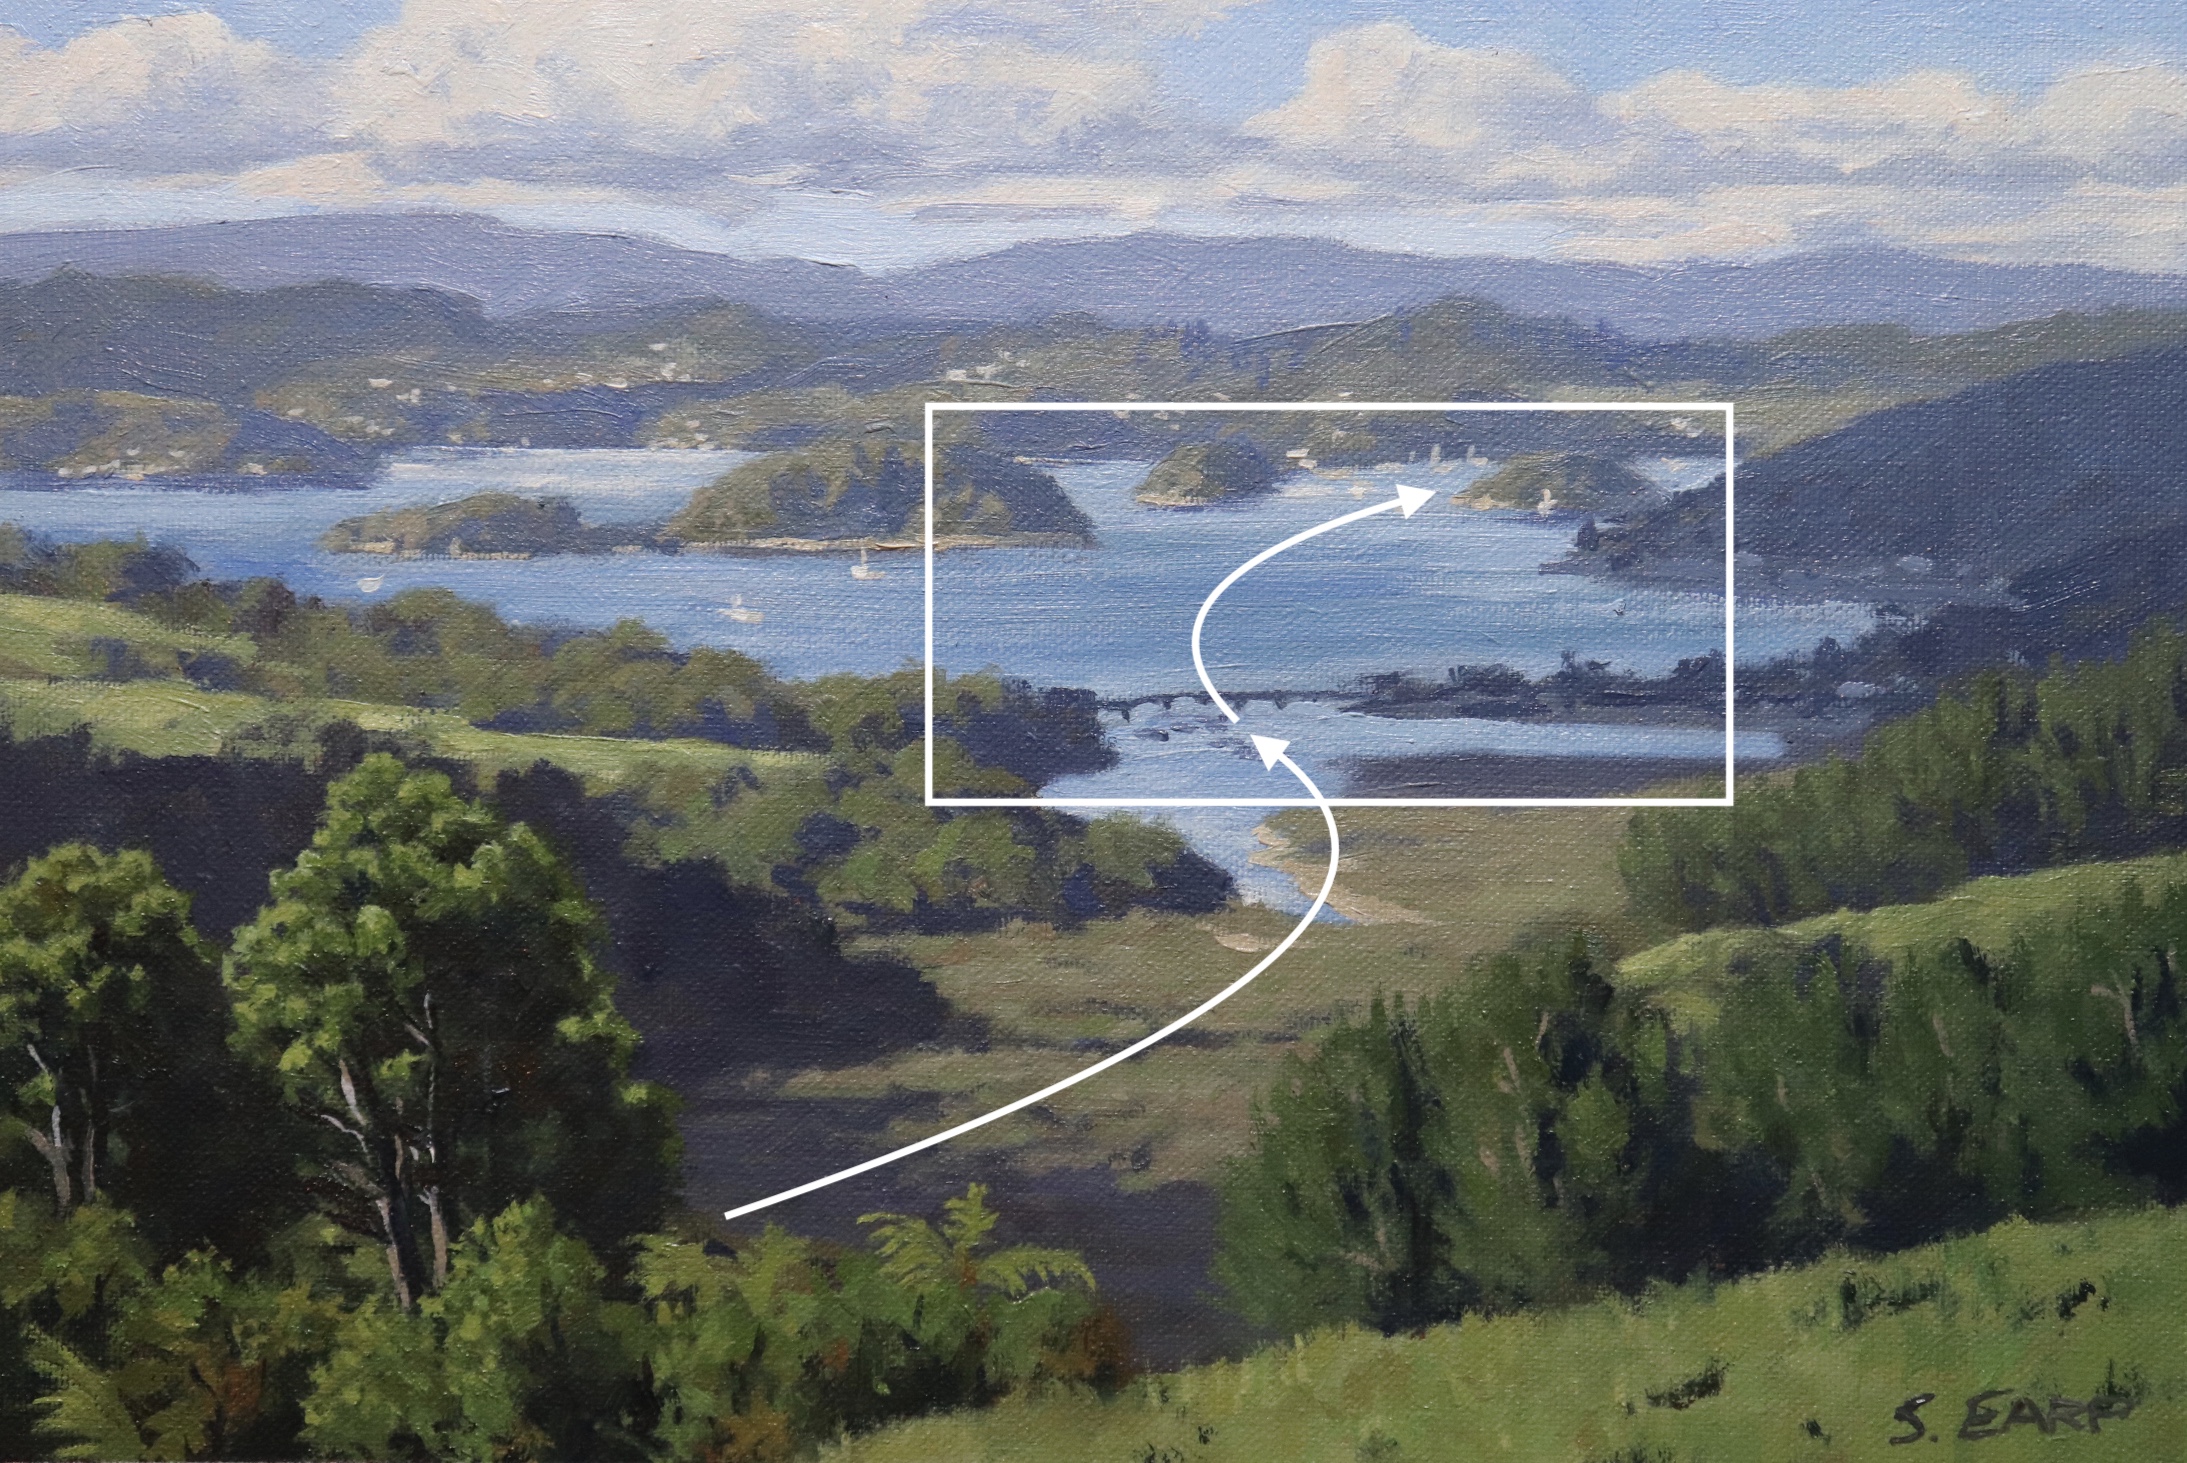 Bay of Islands - New Zealand - Samuel Earp - Oil Painting composition.jpg